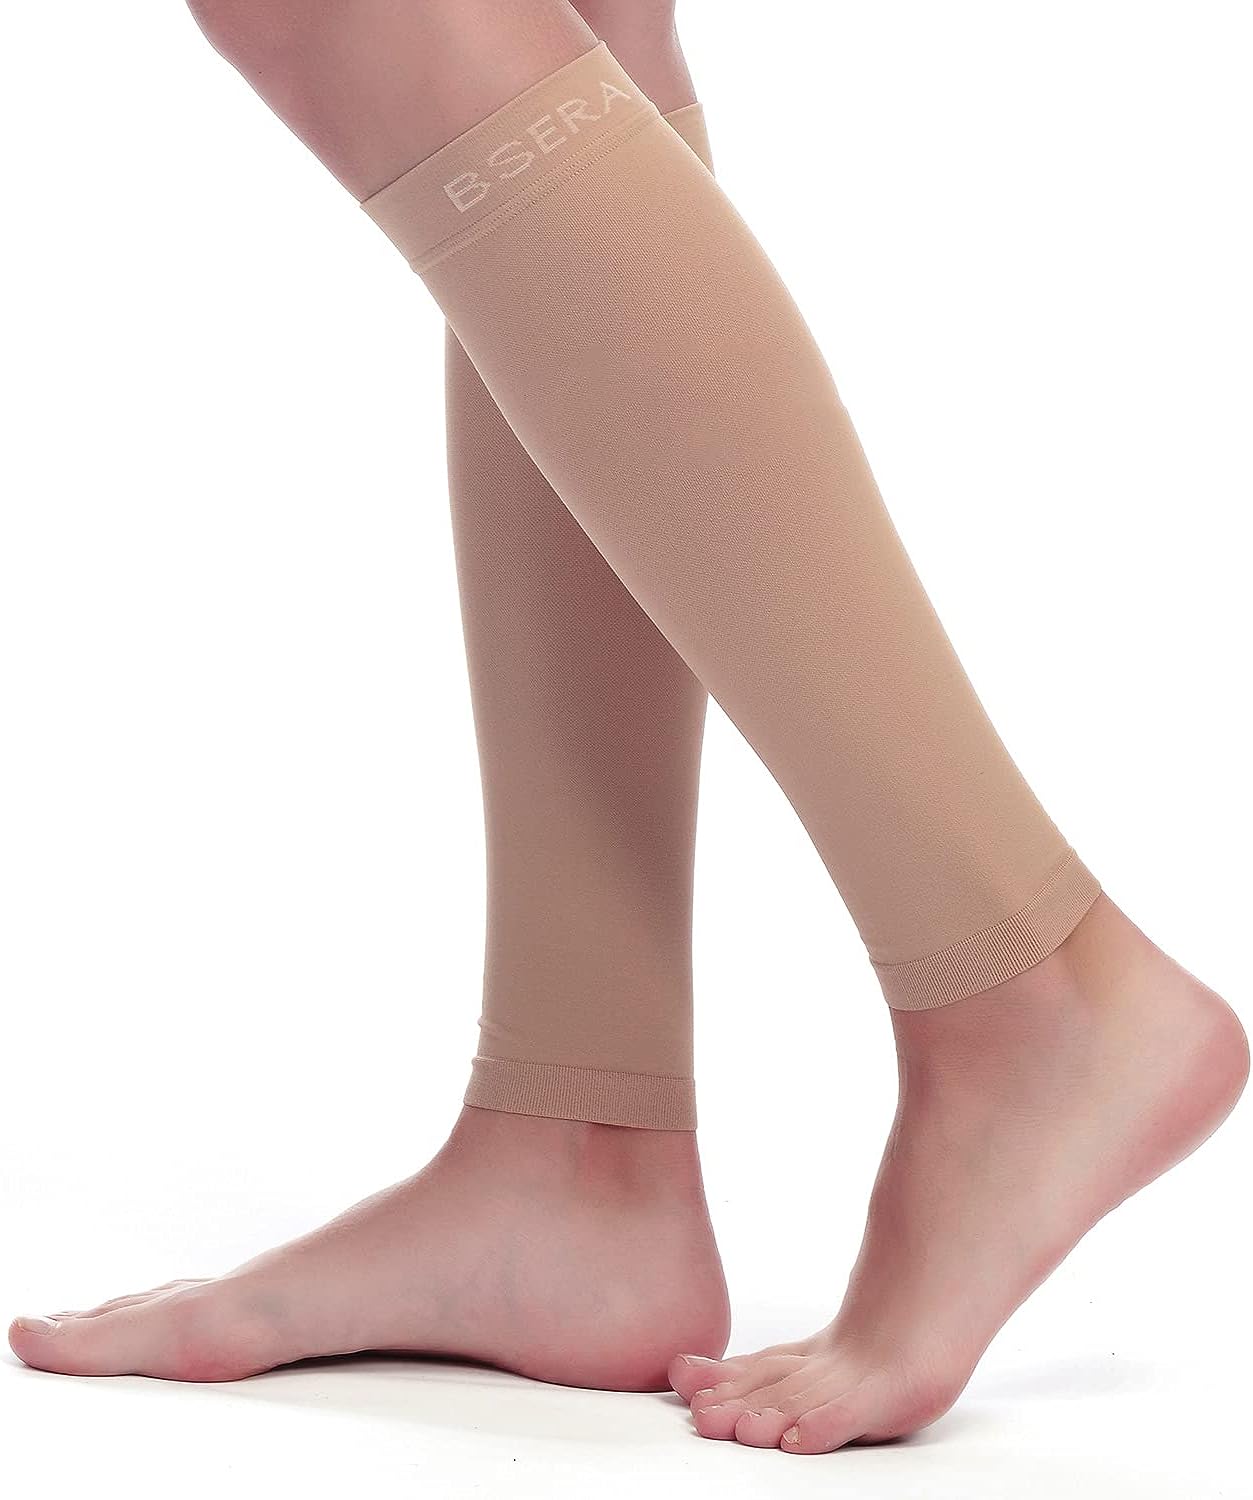 BSERA Calf Compression Sleeve Women, 2 Pairs 20-30mmHg Footless Compression Socks for Swelling Shin Splints Varicose Veins